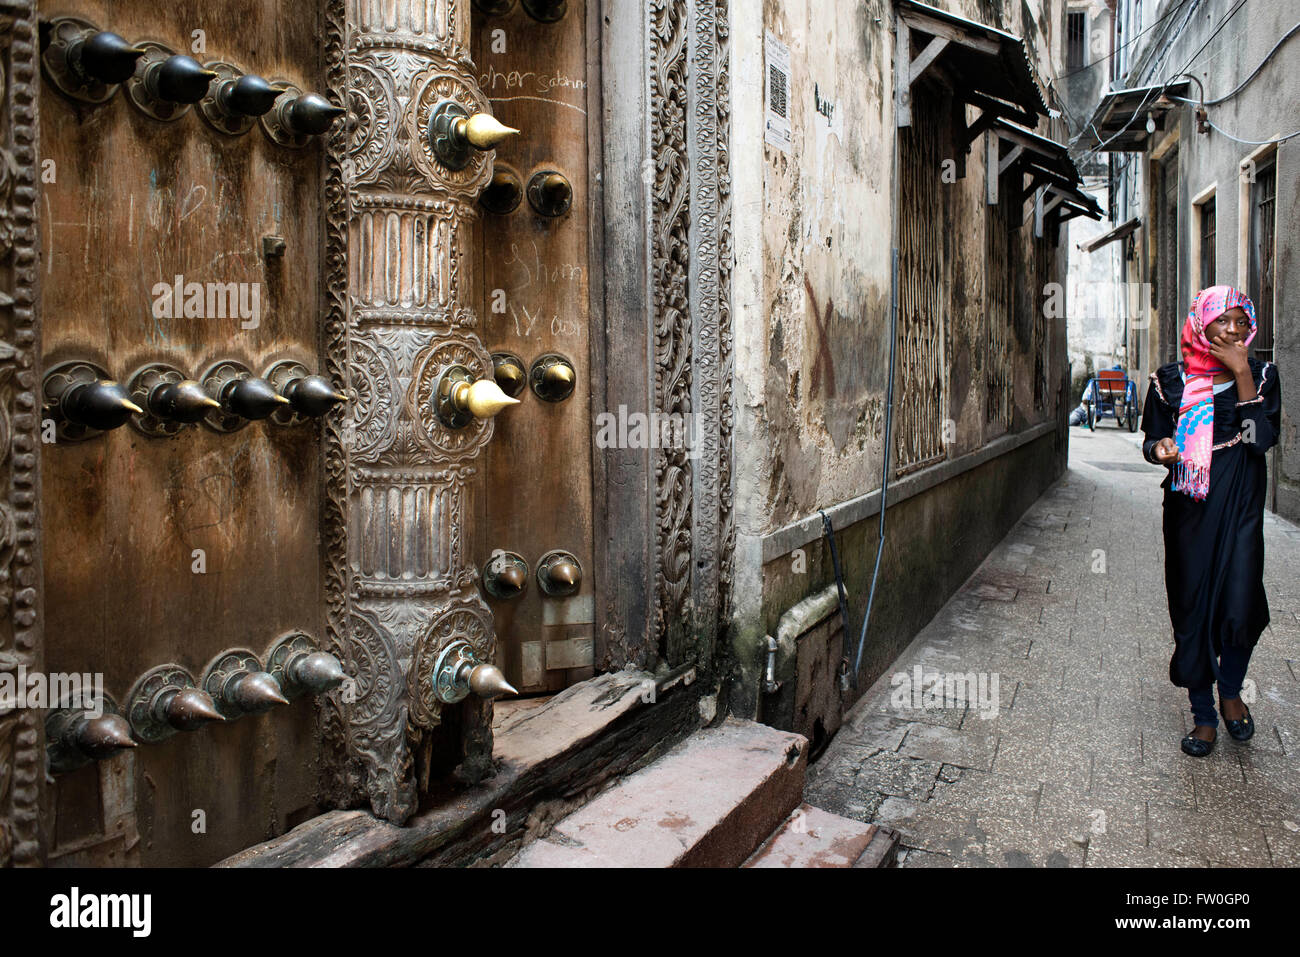 The massive teak doors of one house in Stone Town s maze of narrow streets, Zanzibar, Tanzania. Stock Photo